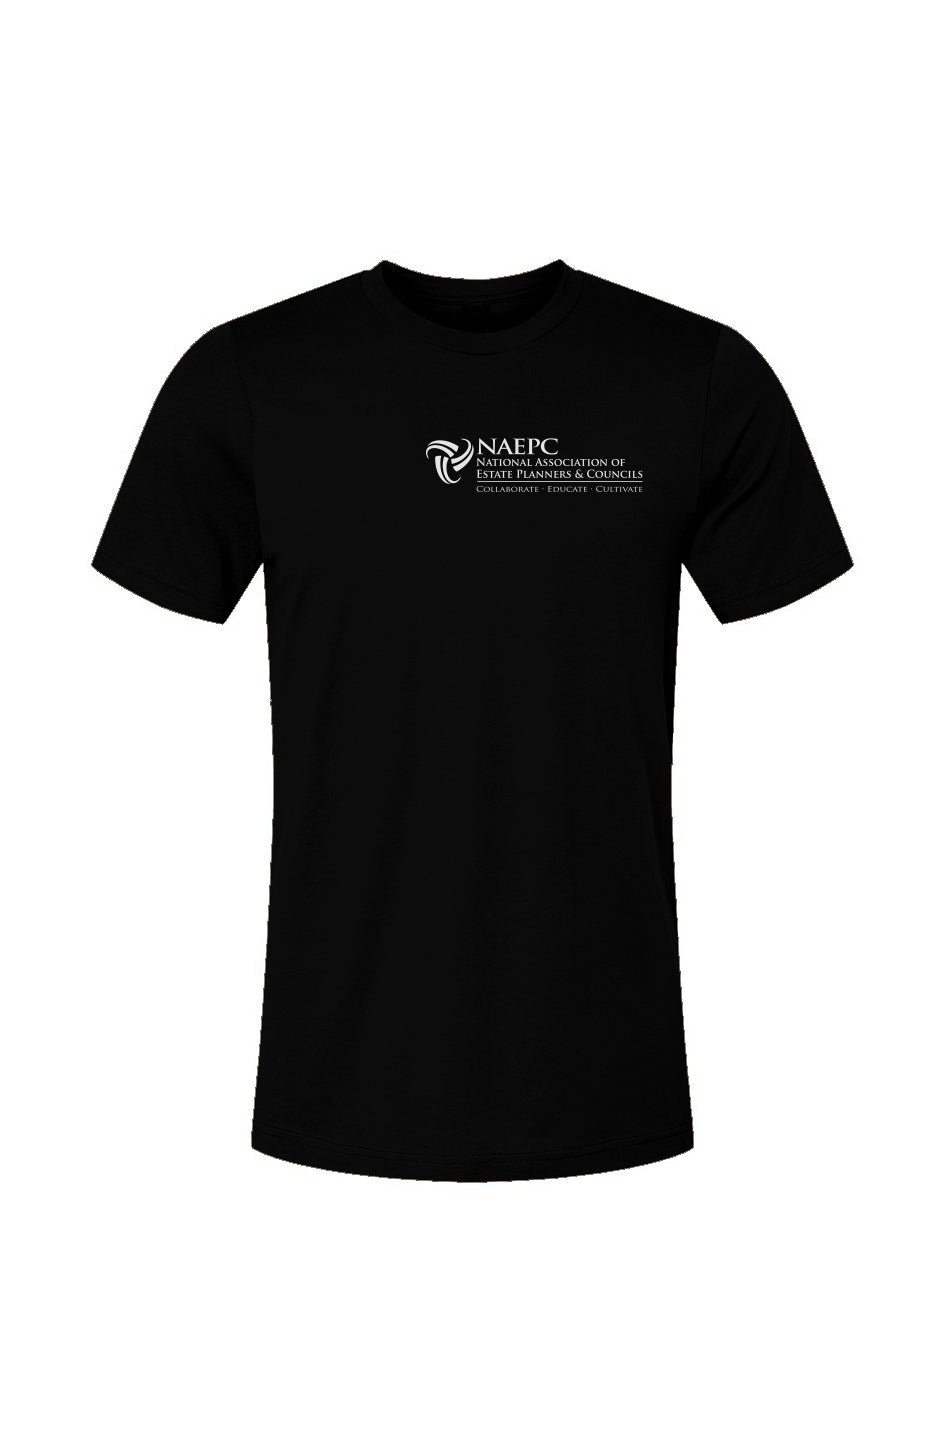 NAEPC T-Shirt Black